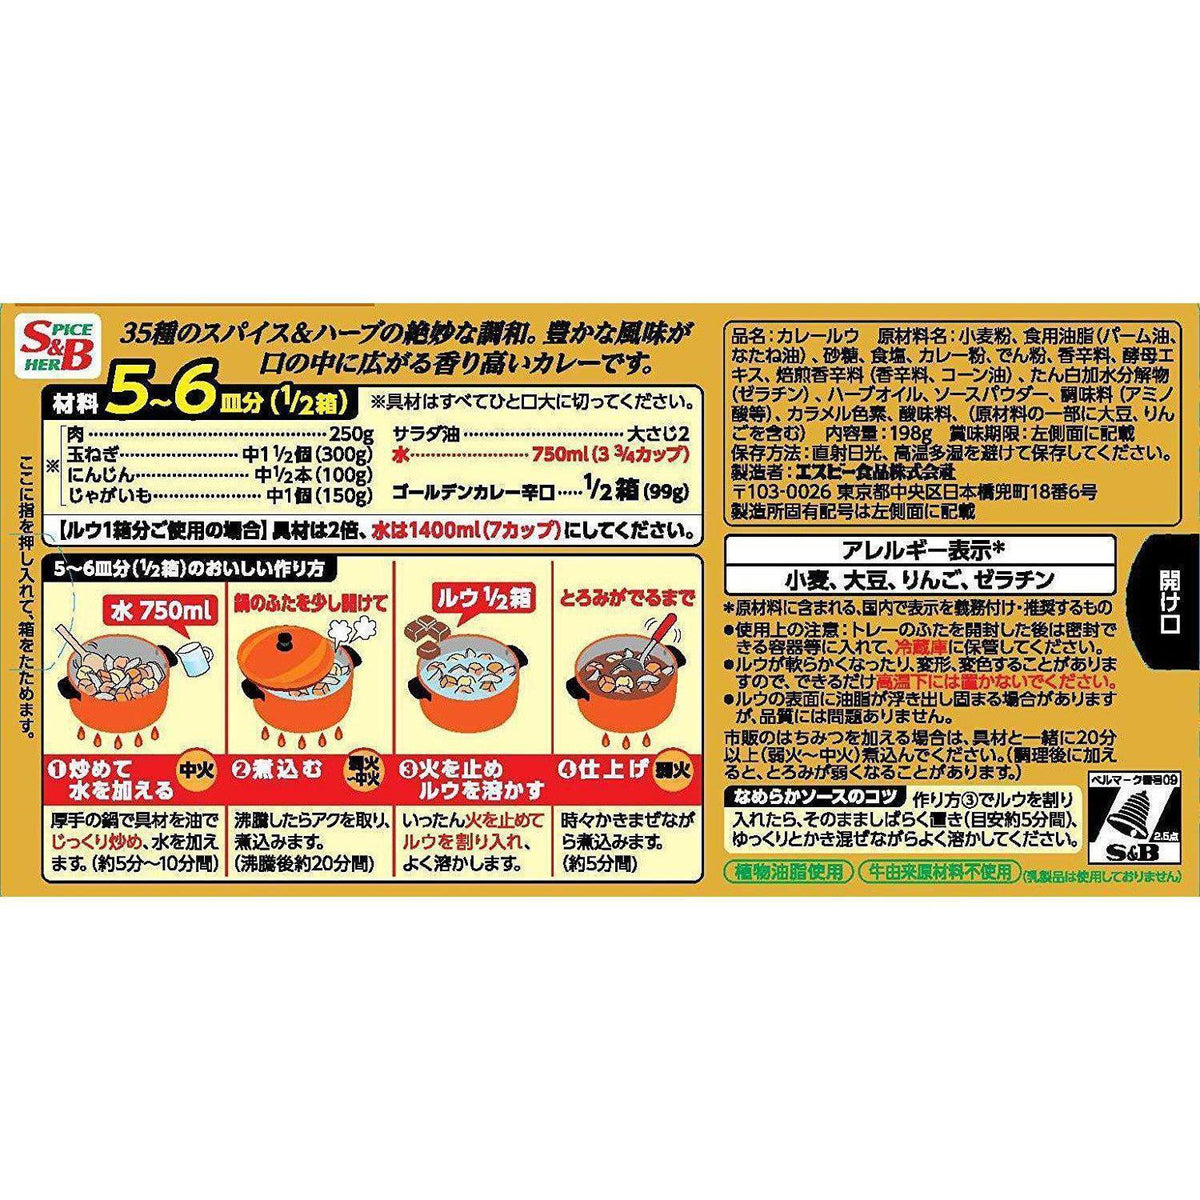 SB Golden Curry Roux - Mild 12 servings (220g) – Mottomart